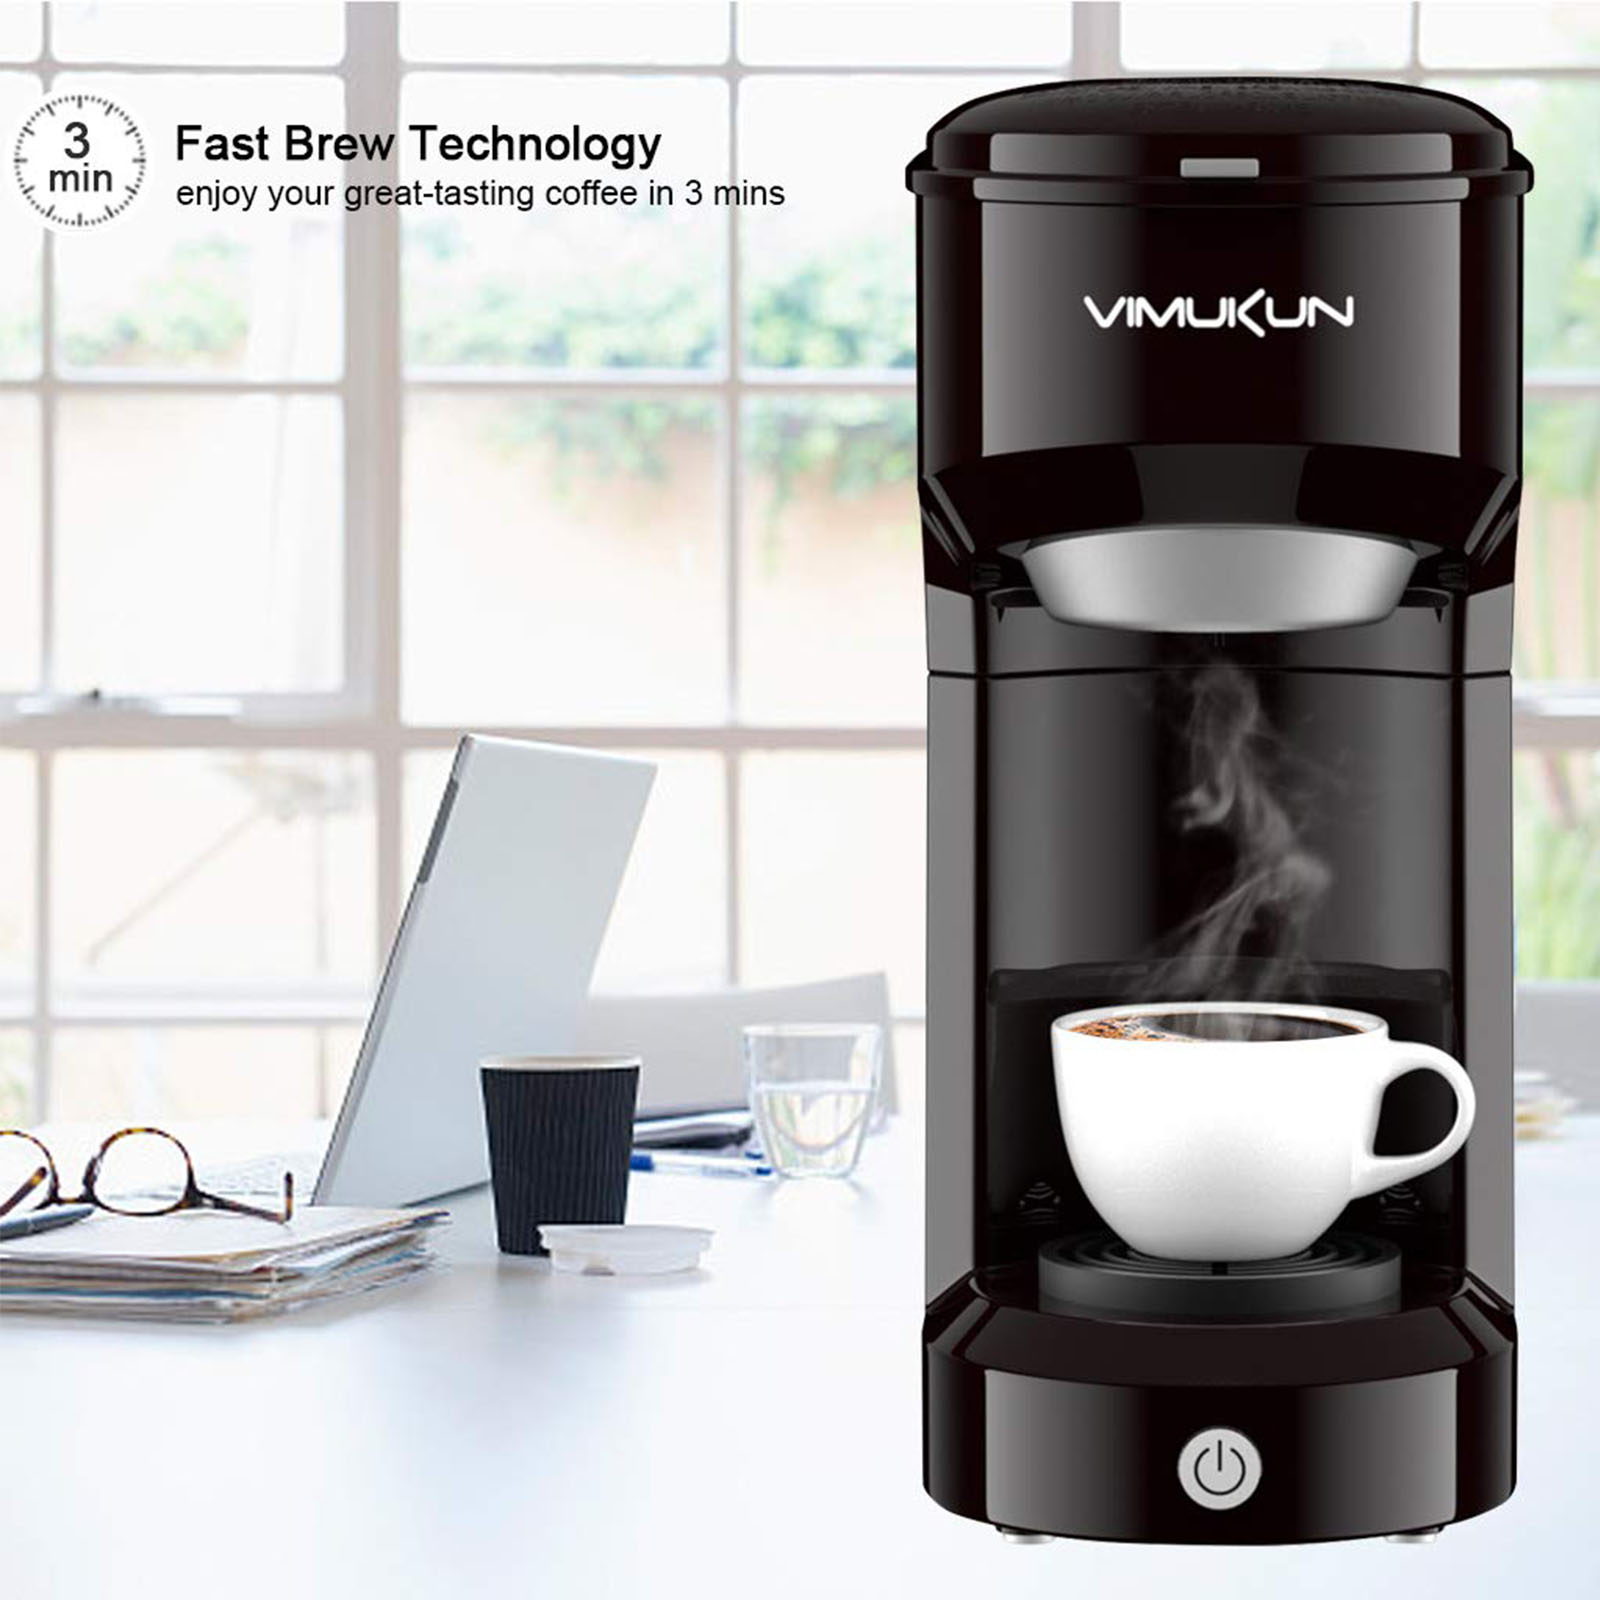 Lleva tu café Nespresso a todas partes con esta cafetera portátil